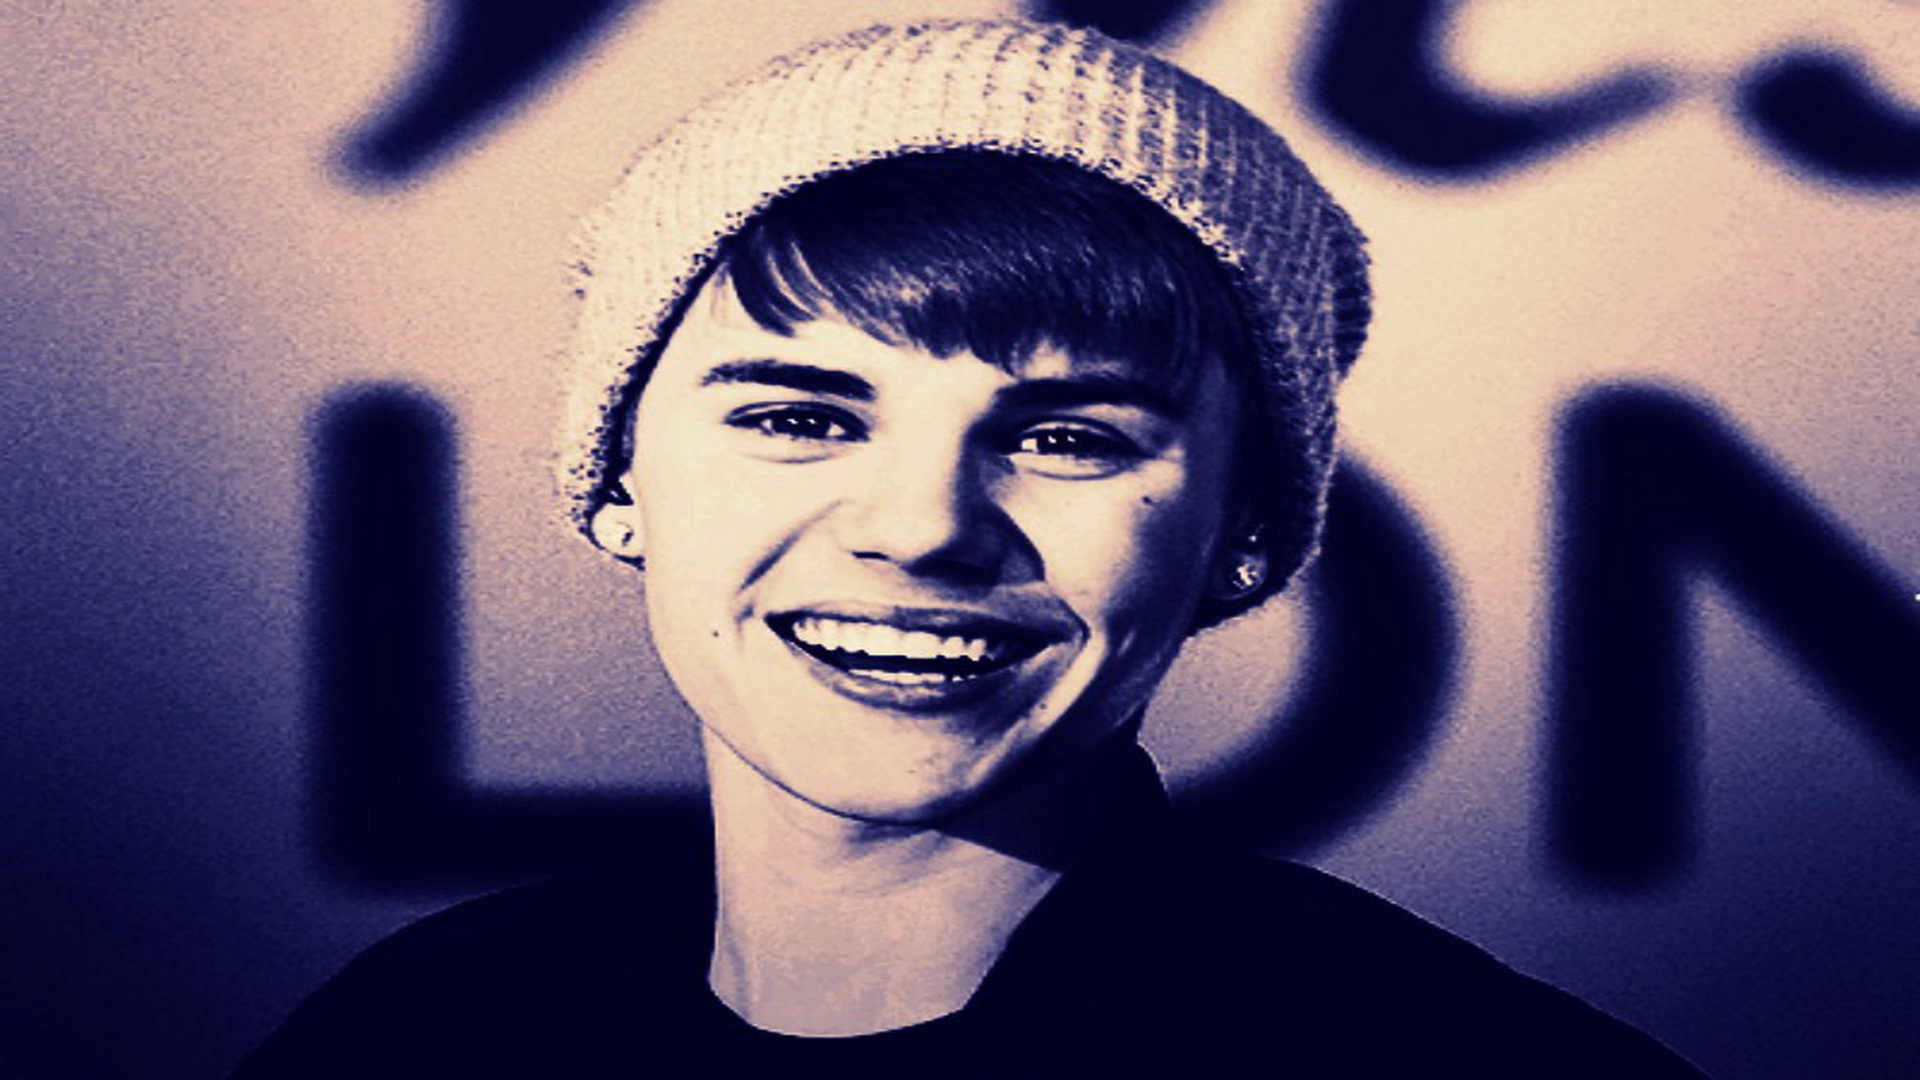 Justin Bieber Wallpaper HD Desktop Background